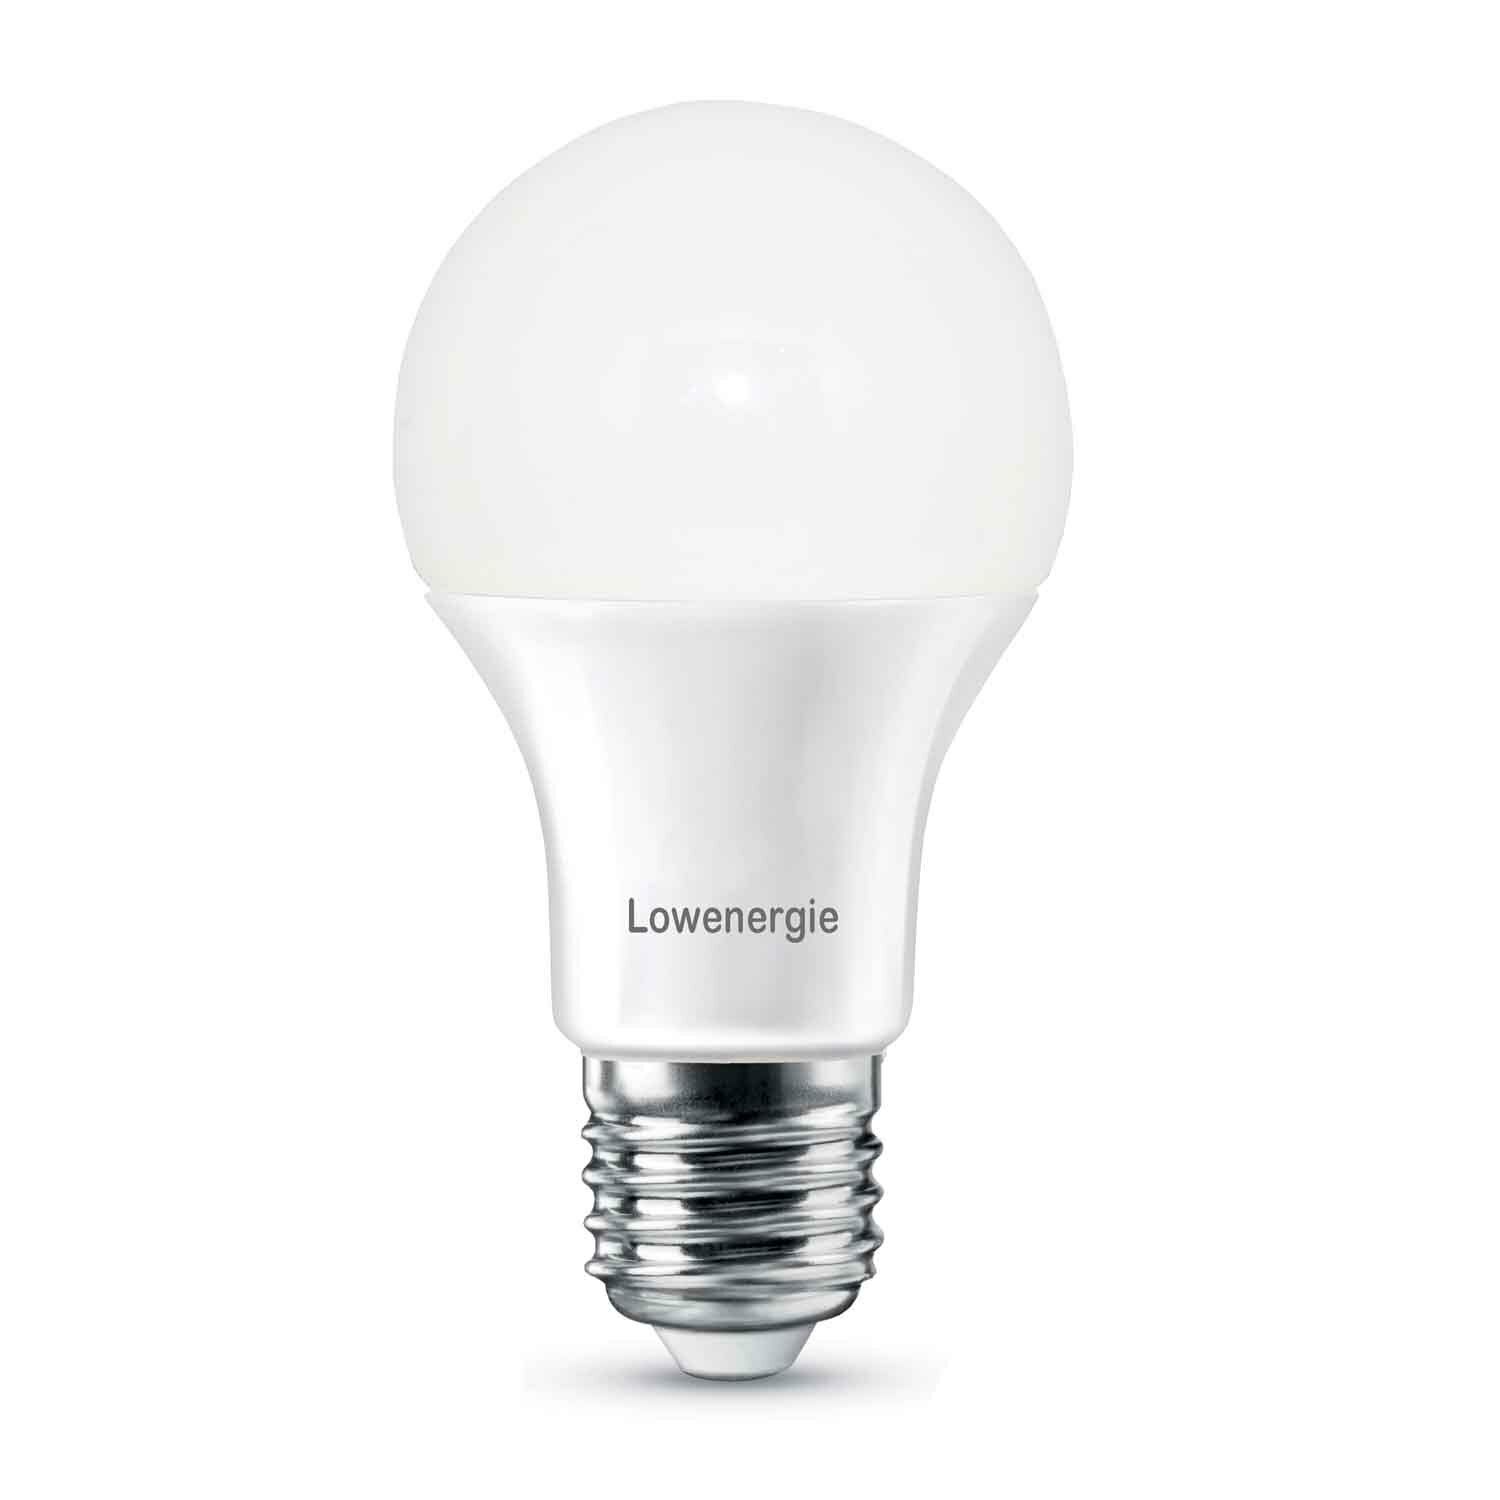 LED Light Bulb Lamp Low Energy 240v B22 Bayonet/E27 Edison Screw 7w, 10w 15w